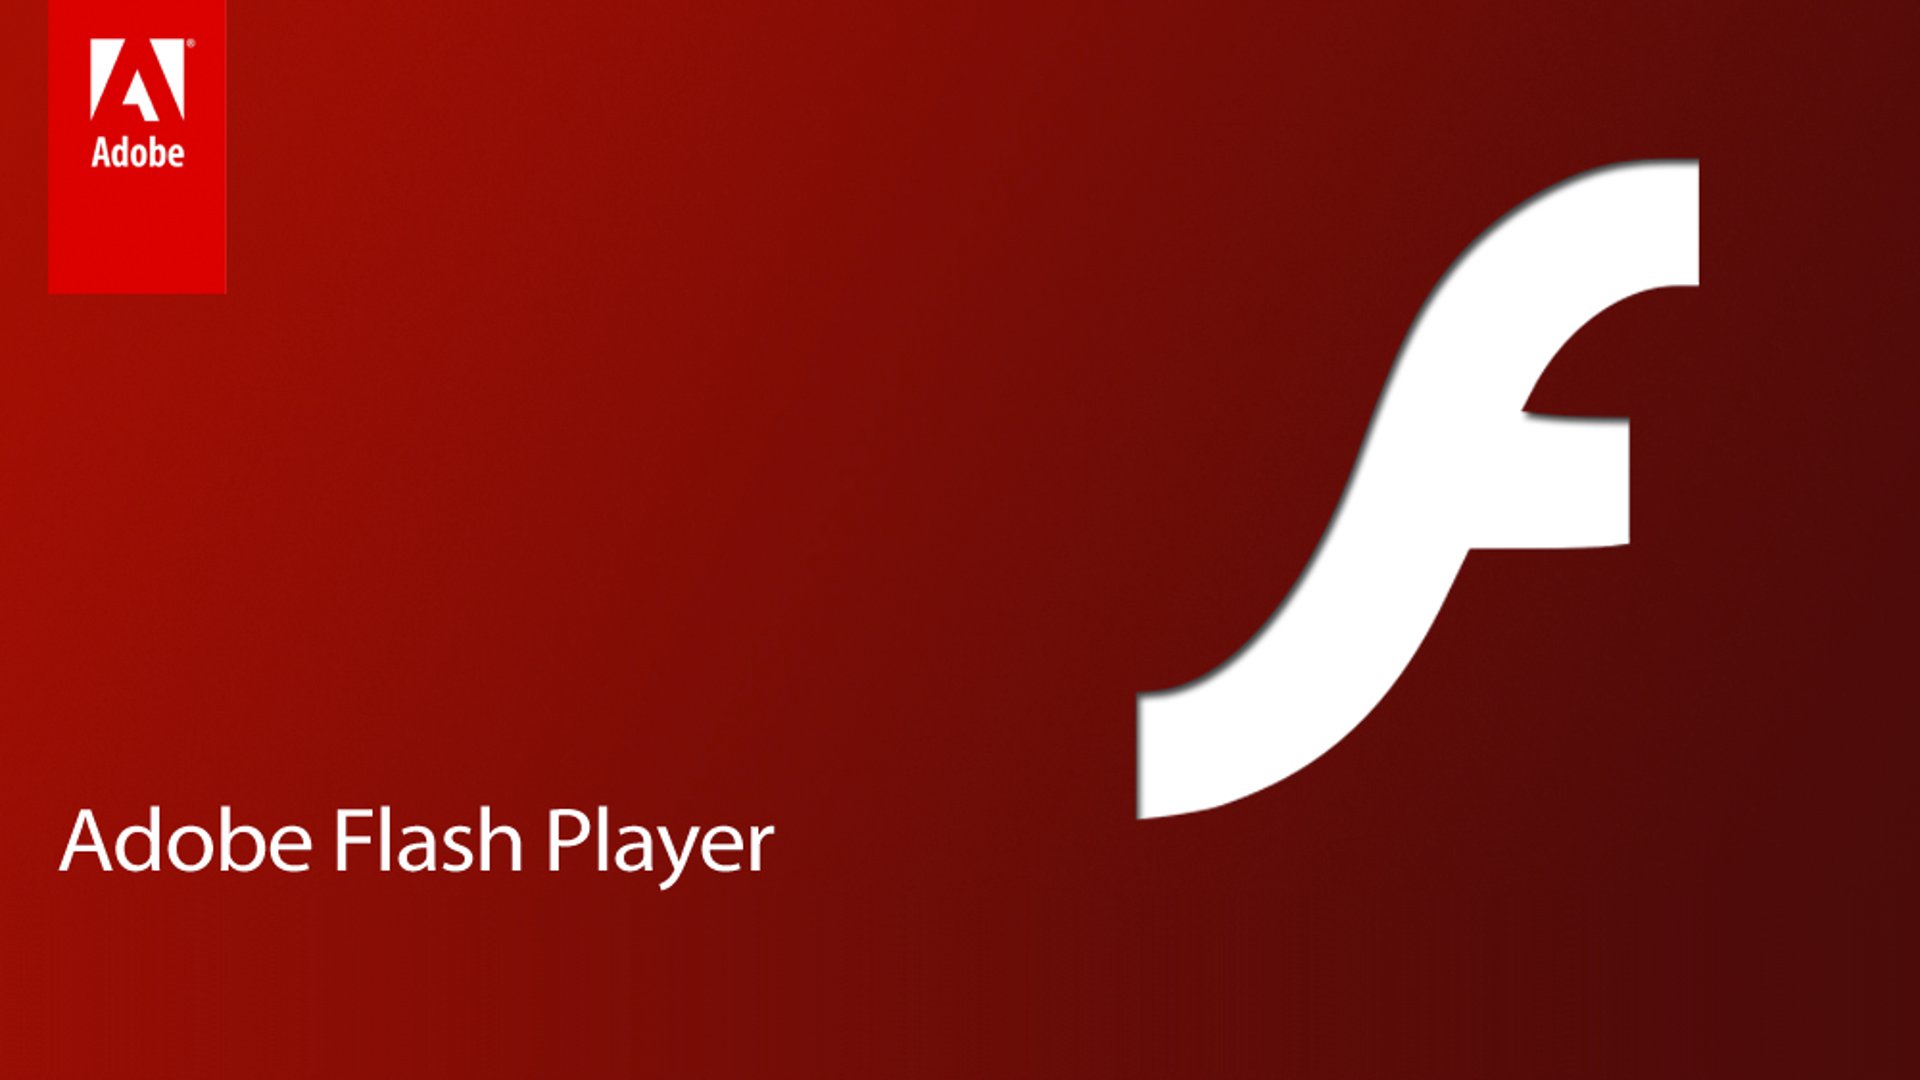 Flash player mac 10.7